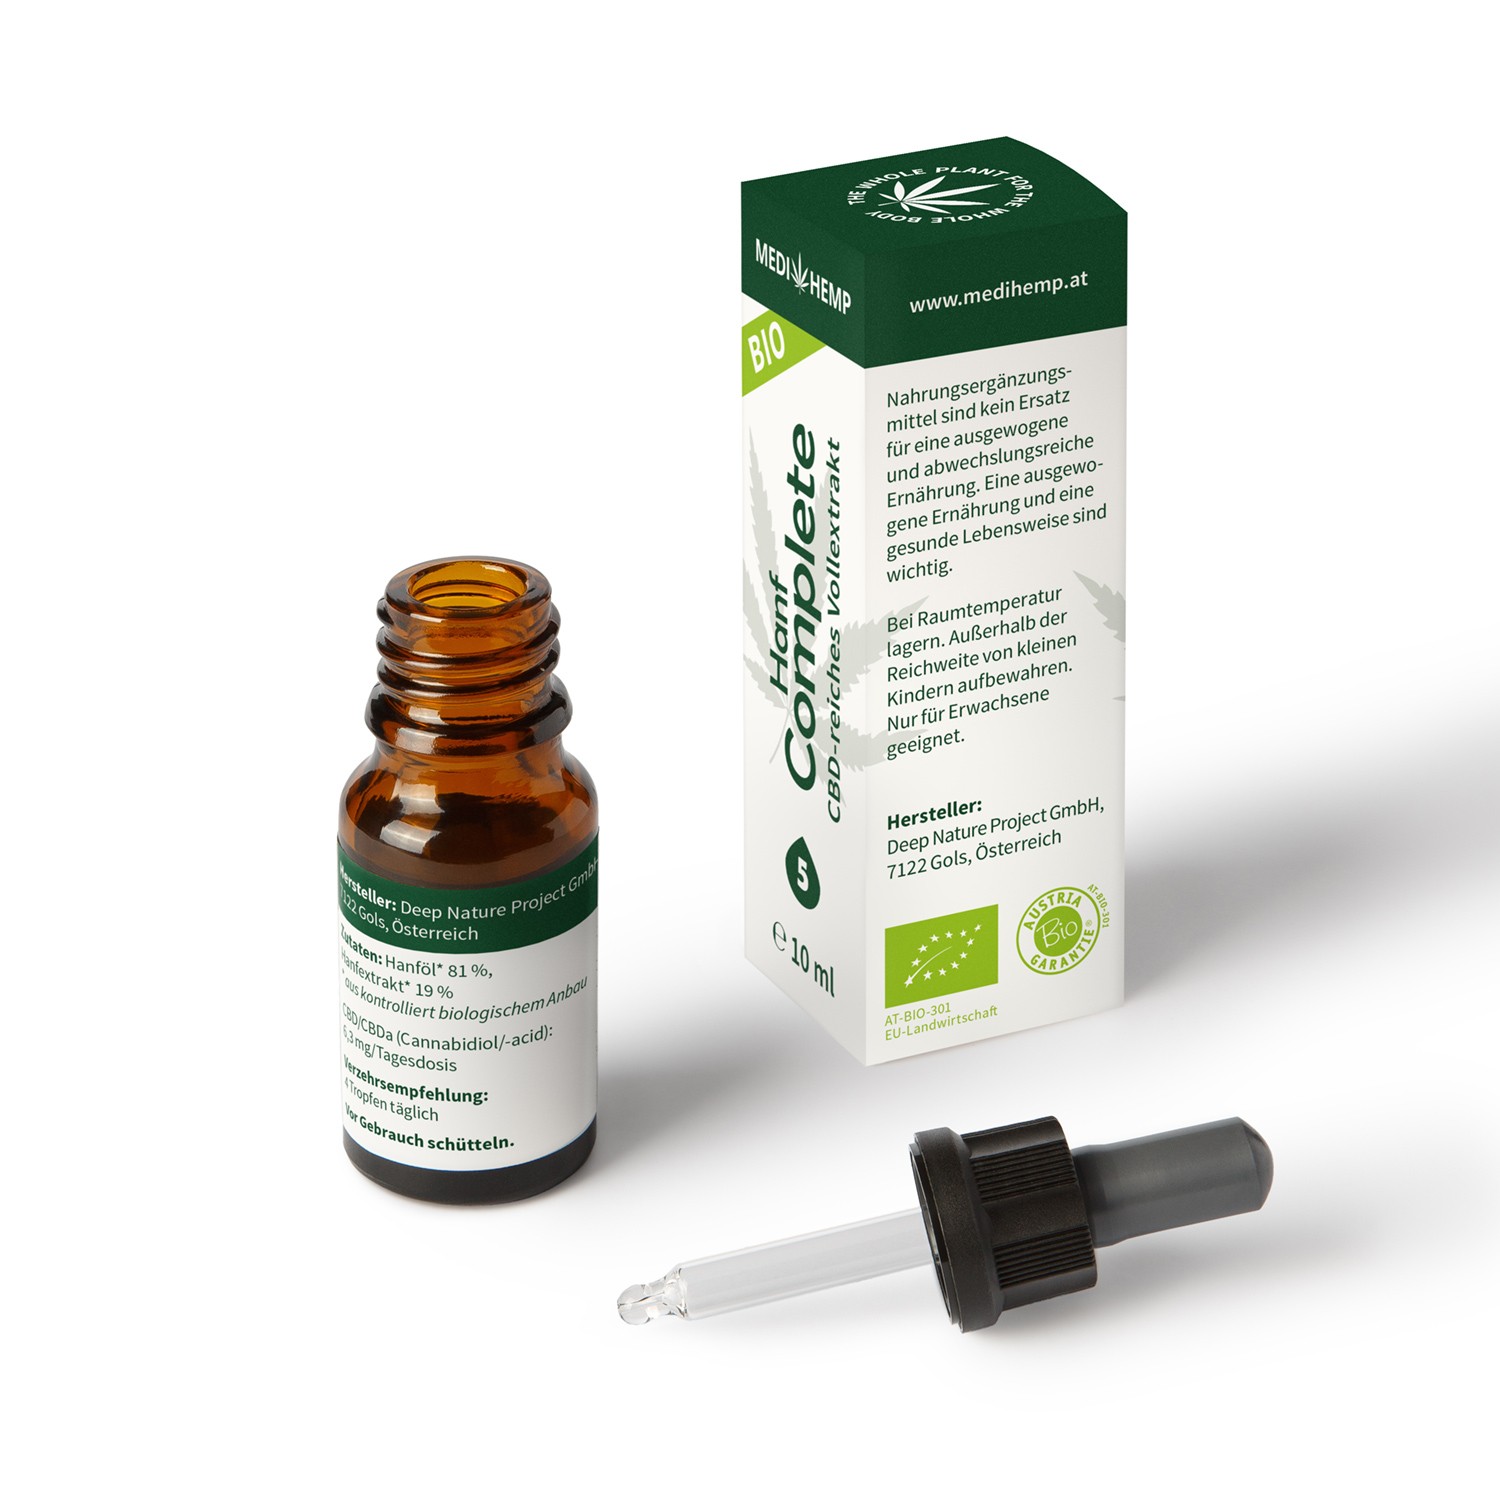 Medihemp Bio Hanf Complete Öl - 5 % - 10 ml - 500 mg CBD Aromaöl